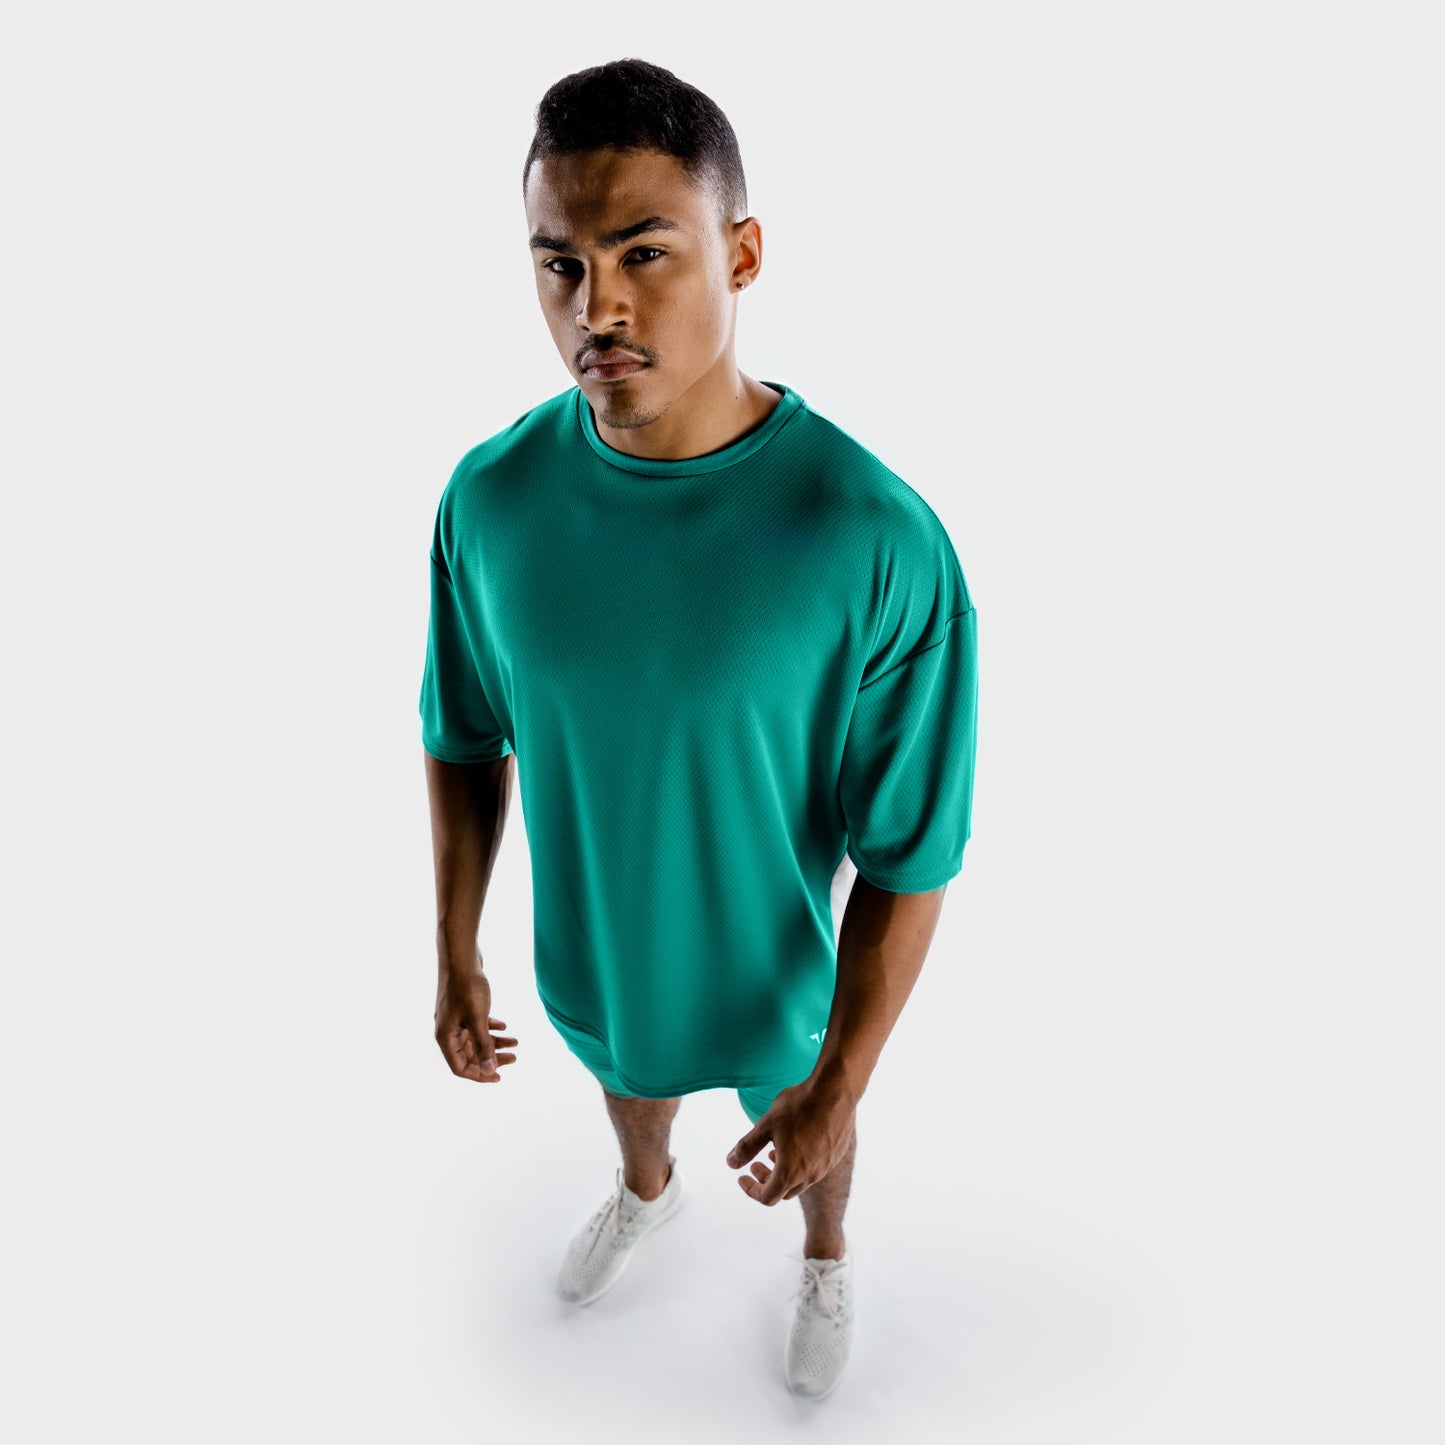 squatwolf-gym-wear-hybrid-2-0-oversize-tee-blue-workout-shirts-for-men